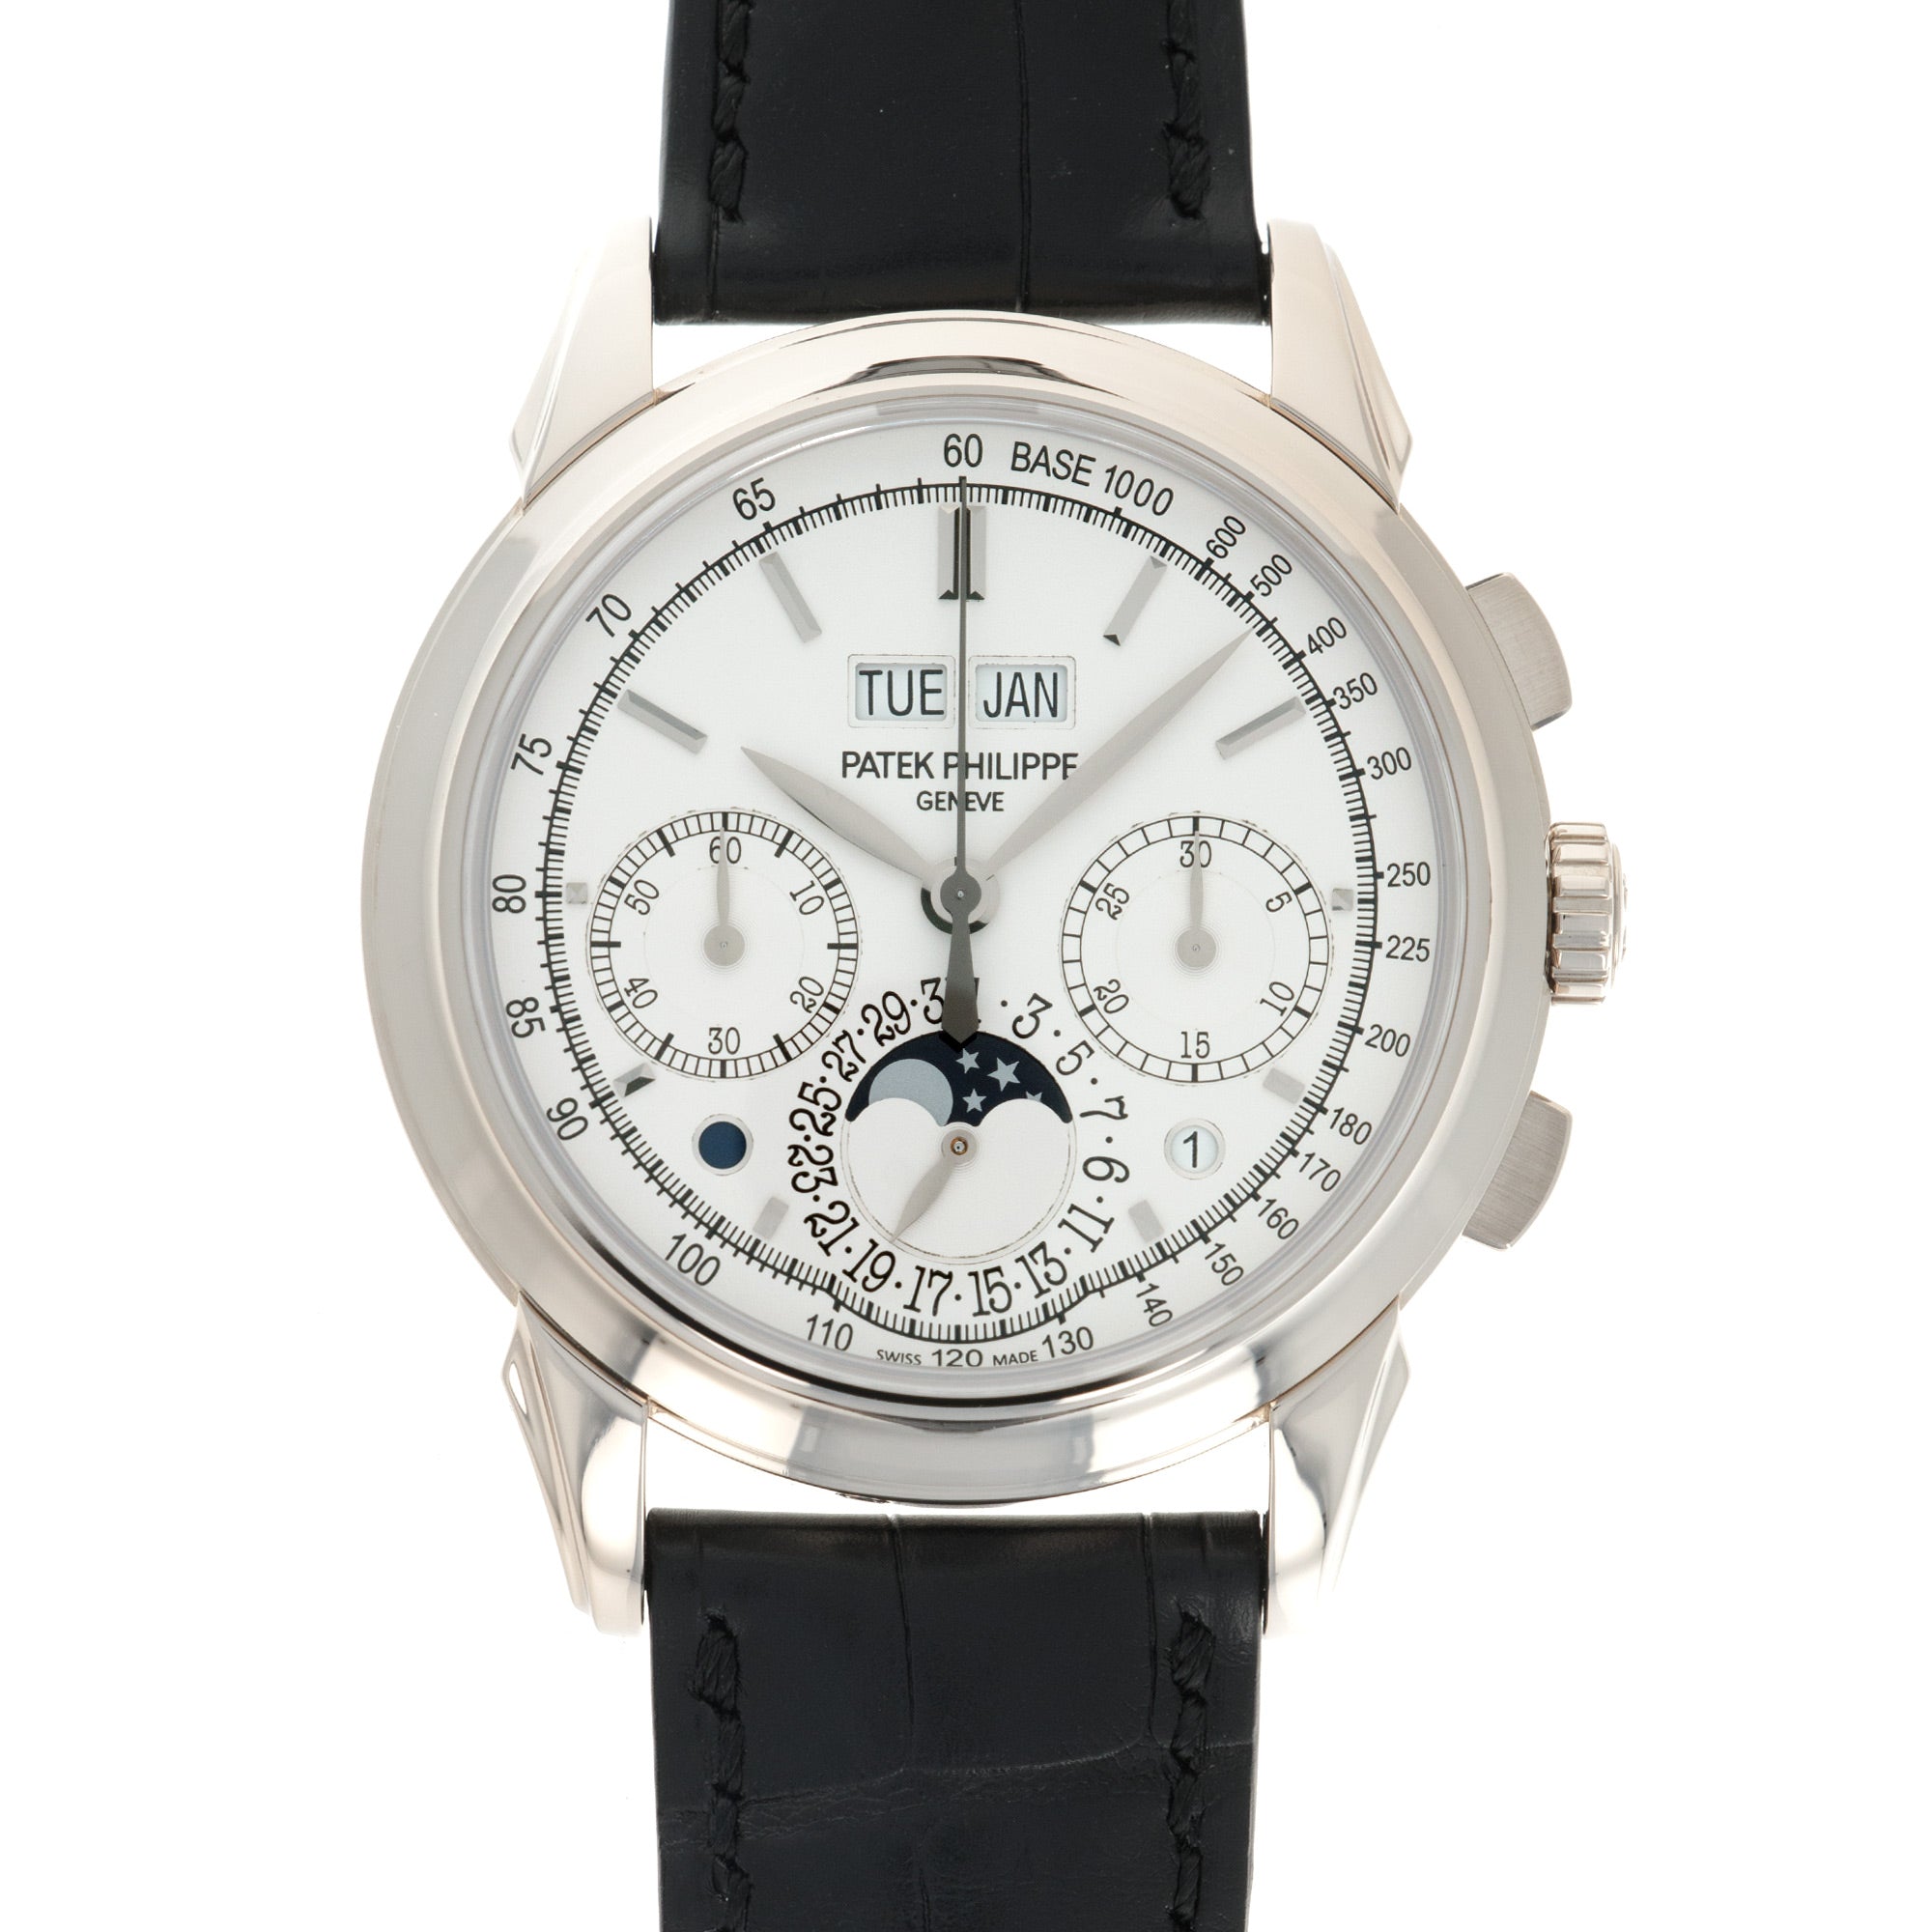 Patek Philippe - Patek Philippe White Gold Perpetual Calendar Chronograph Watch, Ref. 5270 - The Keystone Watches